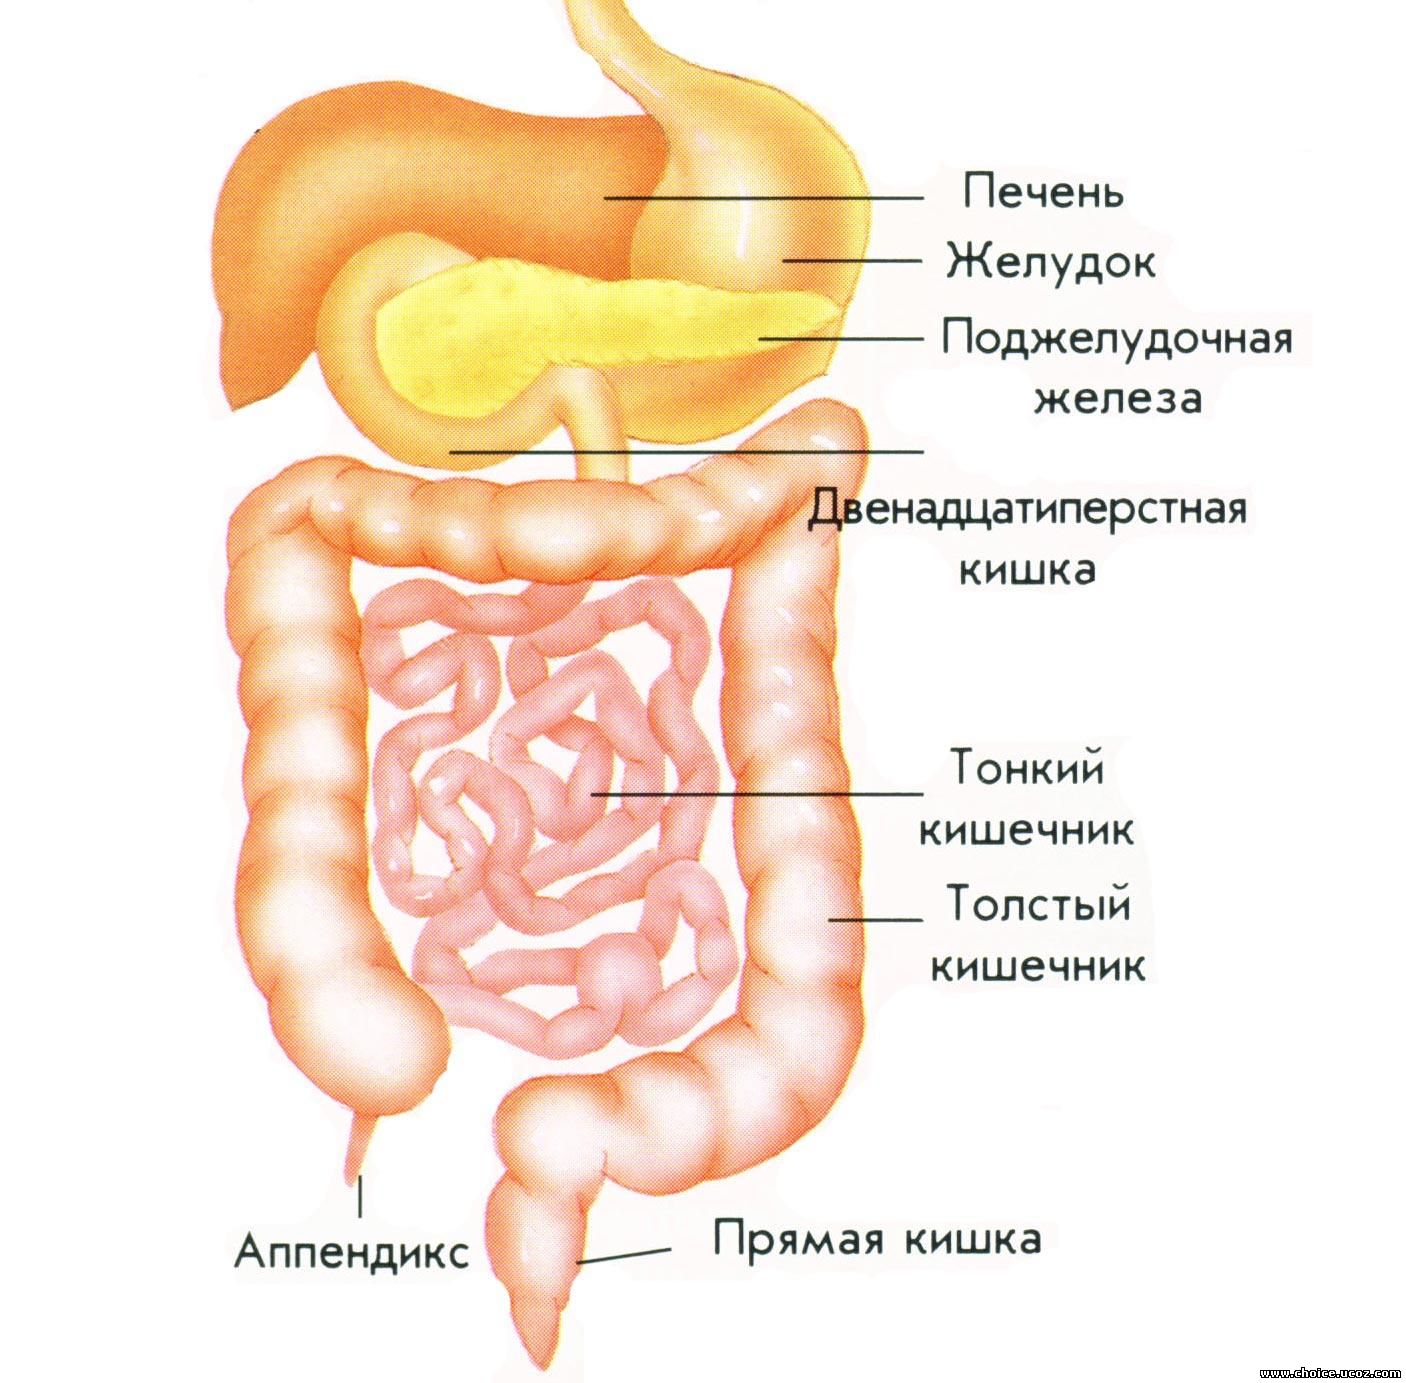 Пищеварительные железы толстого кишечника. Желудочно-кишечный тракт человека строение. Строение желудочно-кишечного тракта человека схема. Строение желудка и кишечника. Поджелудочная железа и тонкий кишечник.